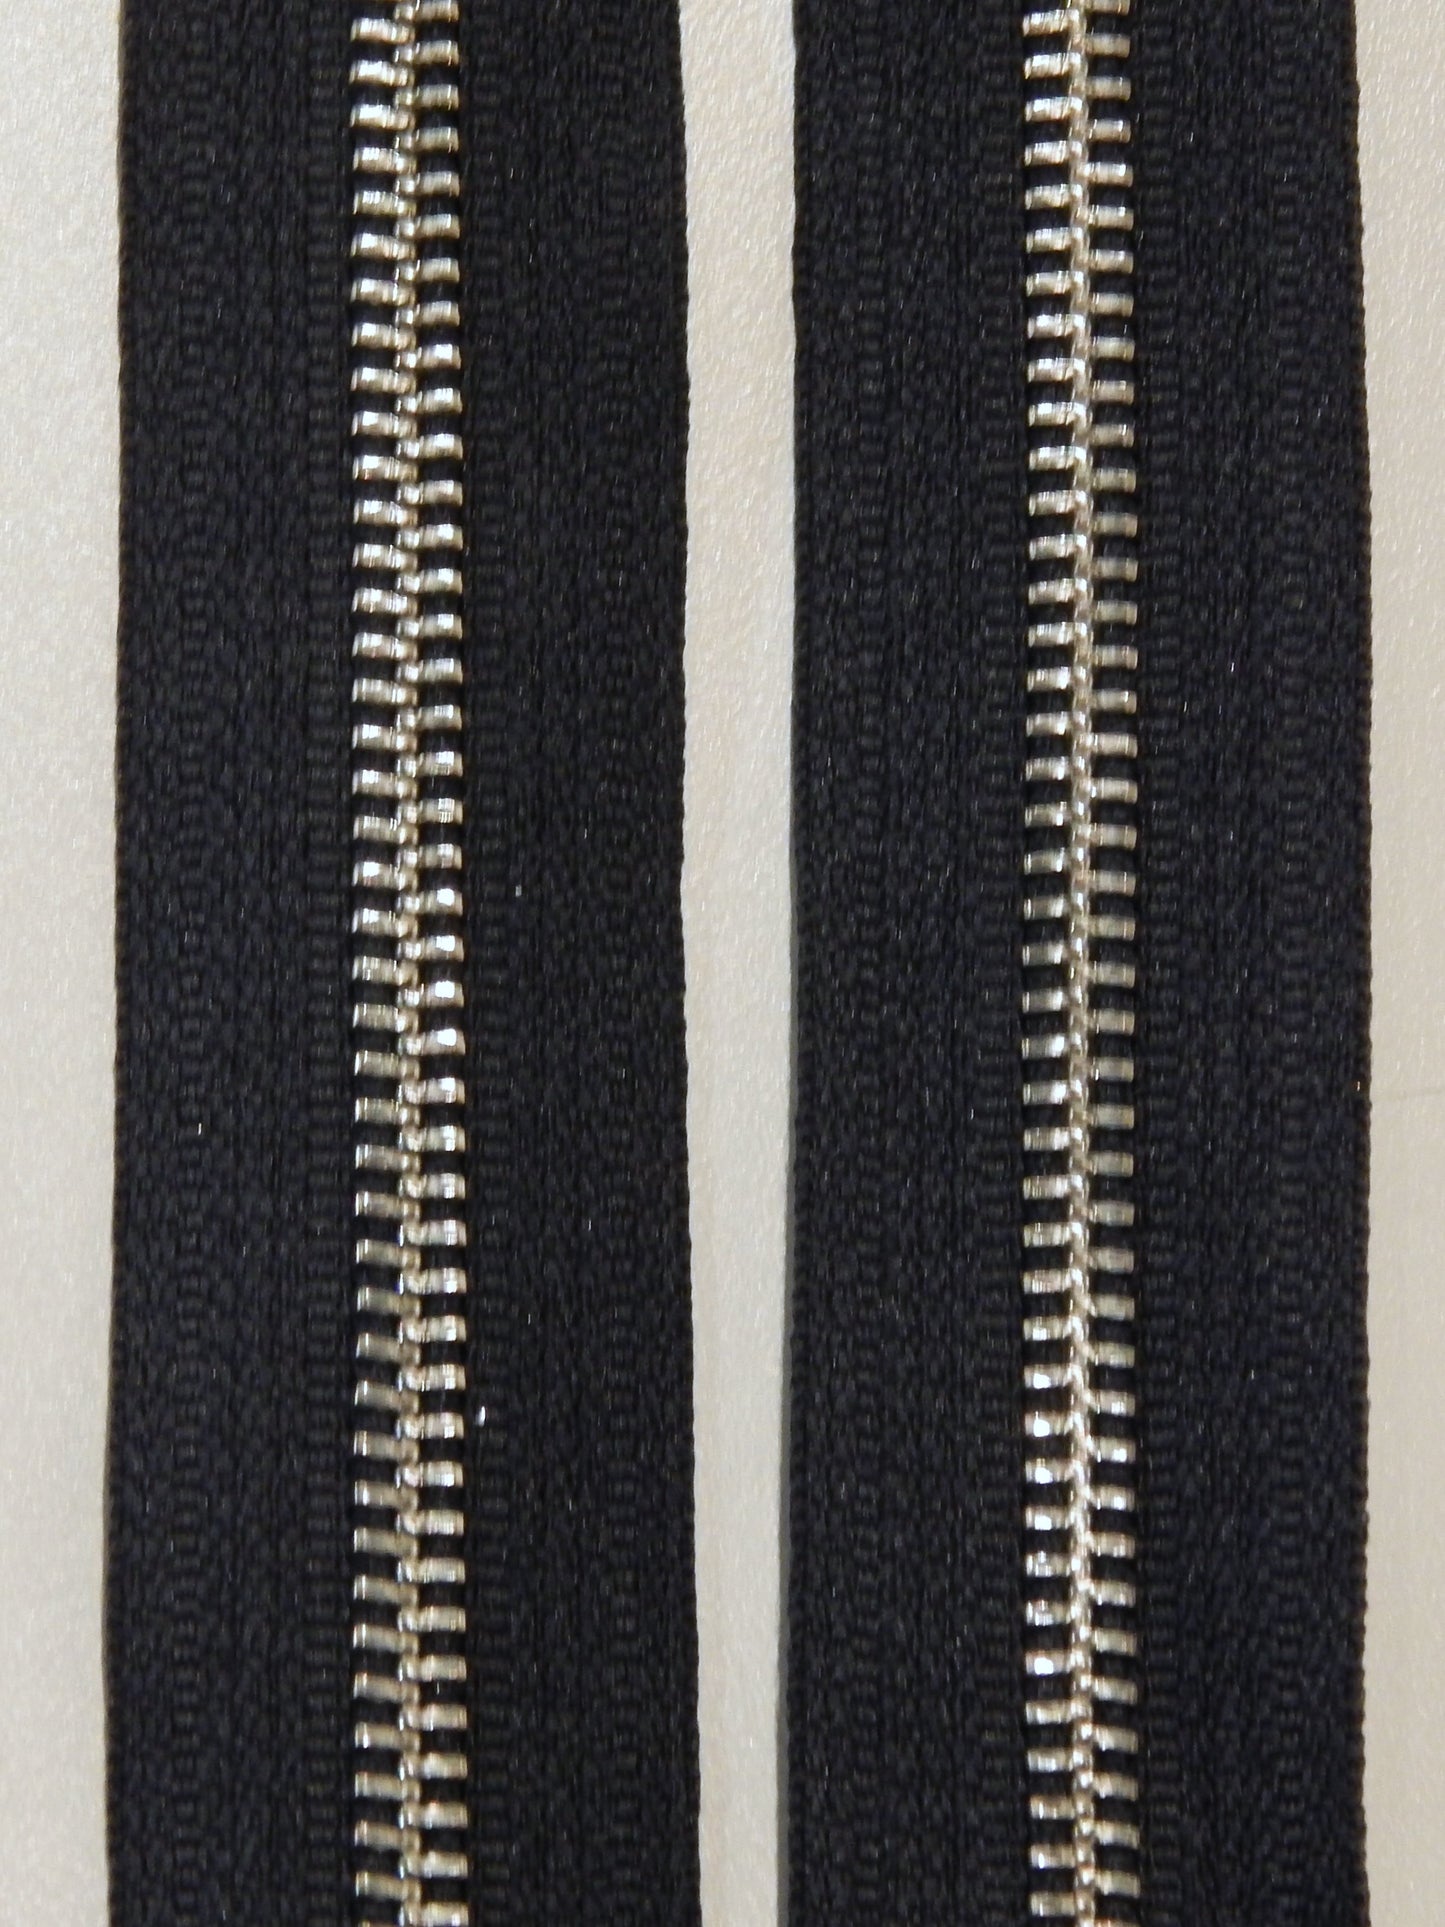 Aluminum Separating Jacket Zippers